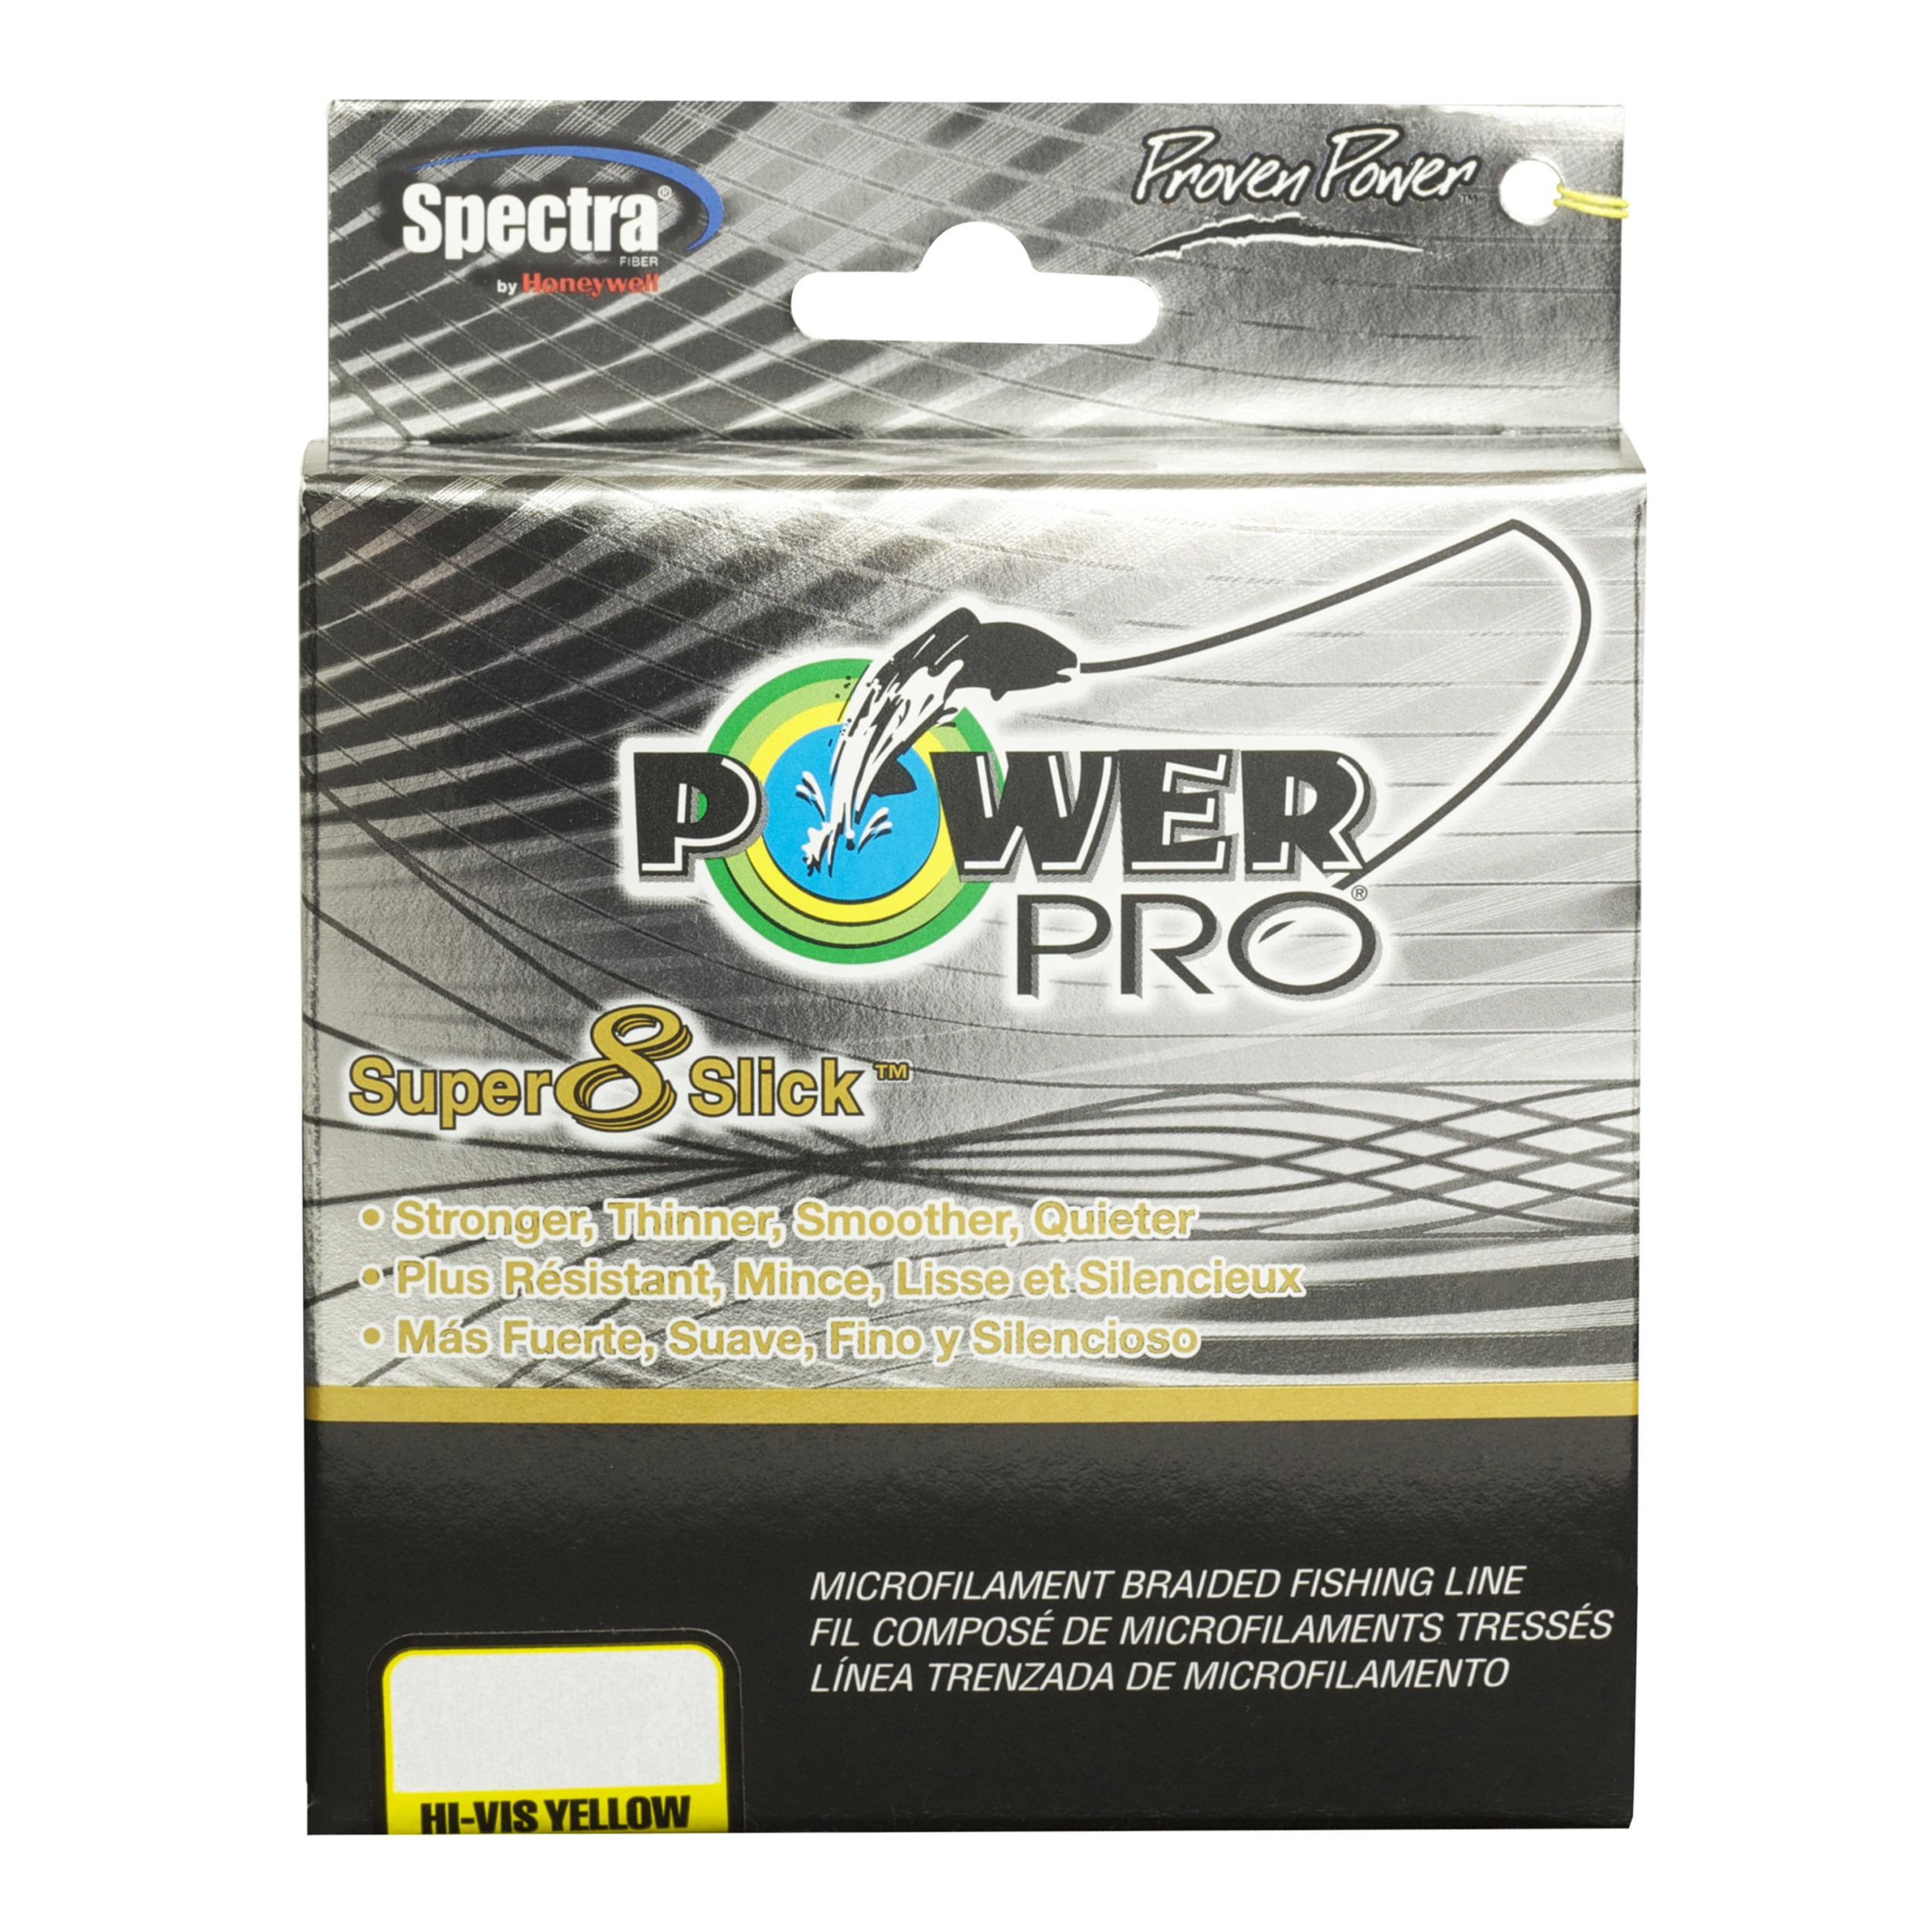 Power Pro Super 8 Slick Braided Fishing Line, 50-Pound/300-Yard